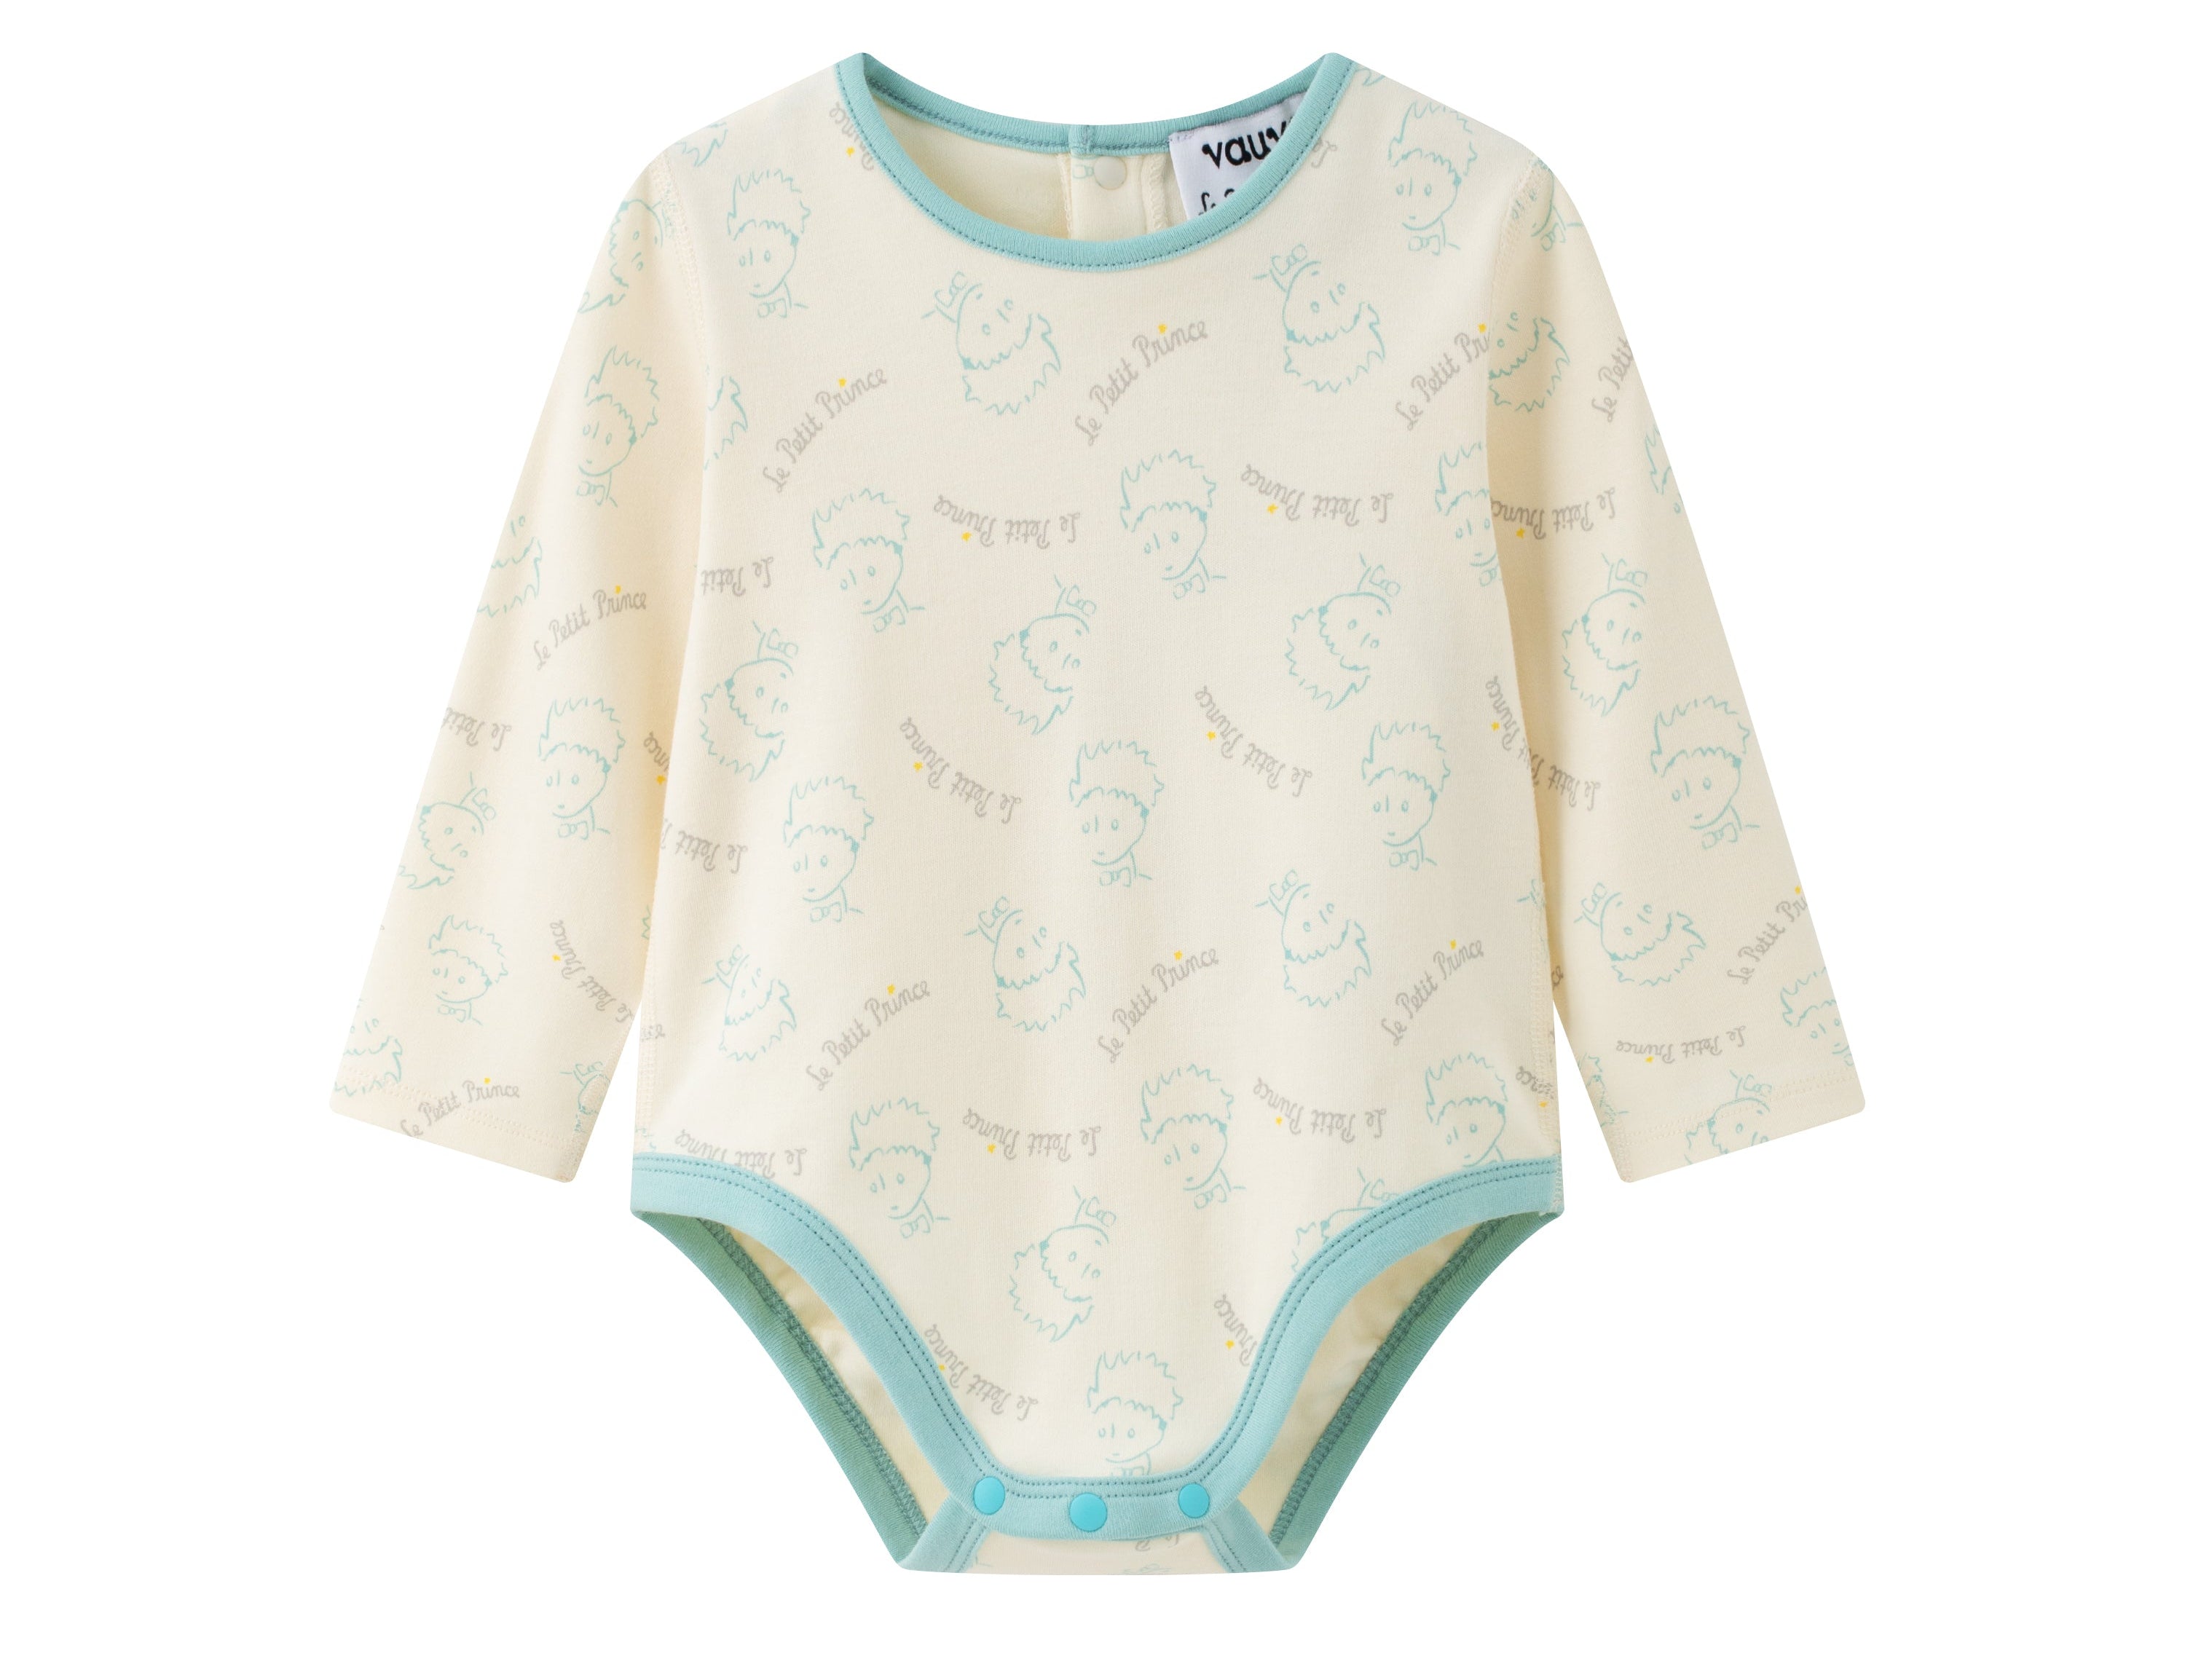 Vauva x Le Petit Prince - Baby Boy Little Prince Full Print Long Sleeve Bodysuit product image front